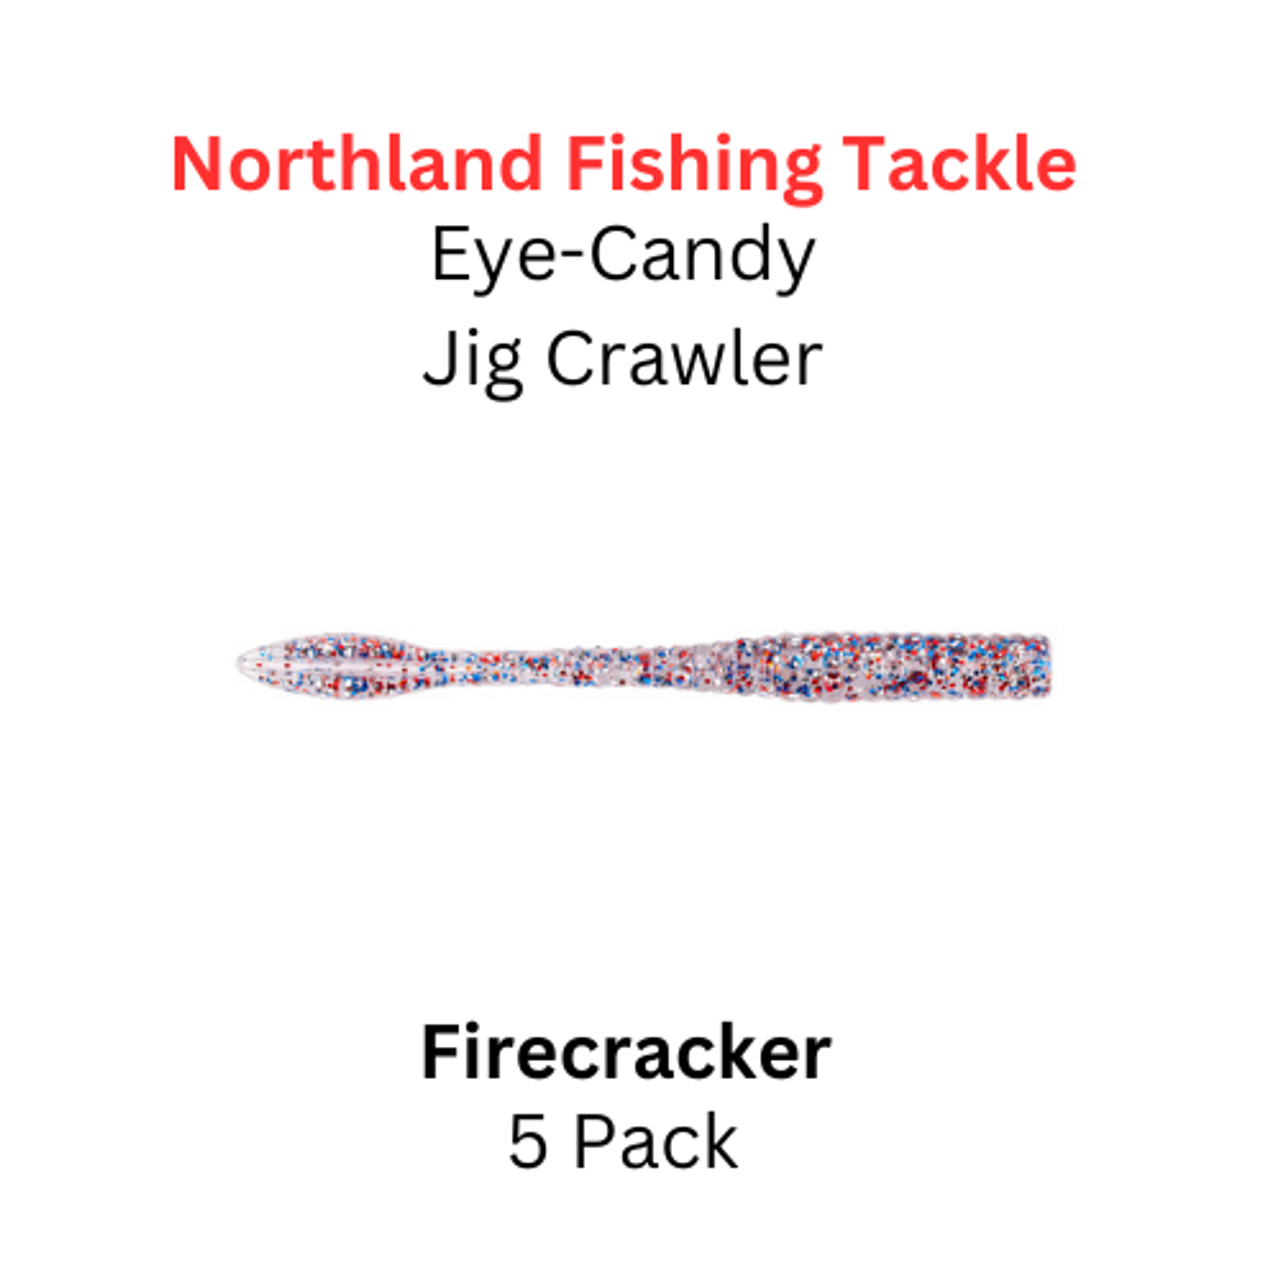 Northland fishing tackle eye candy jig crawler Firecracker